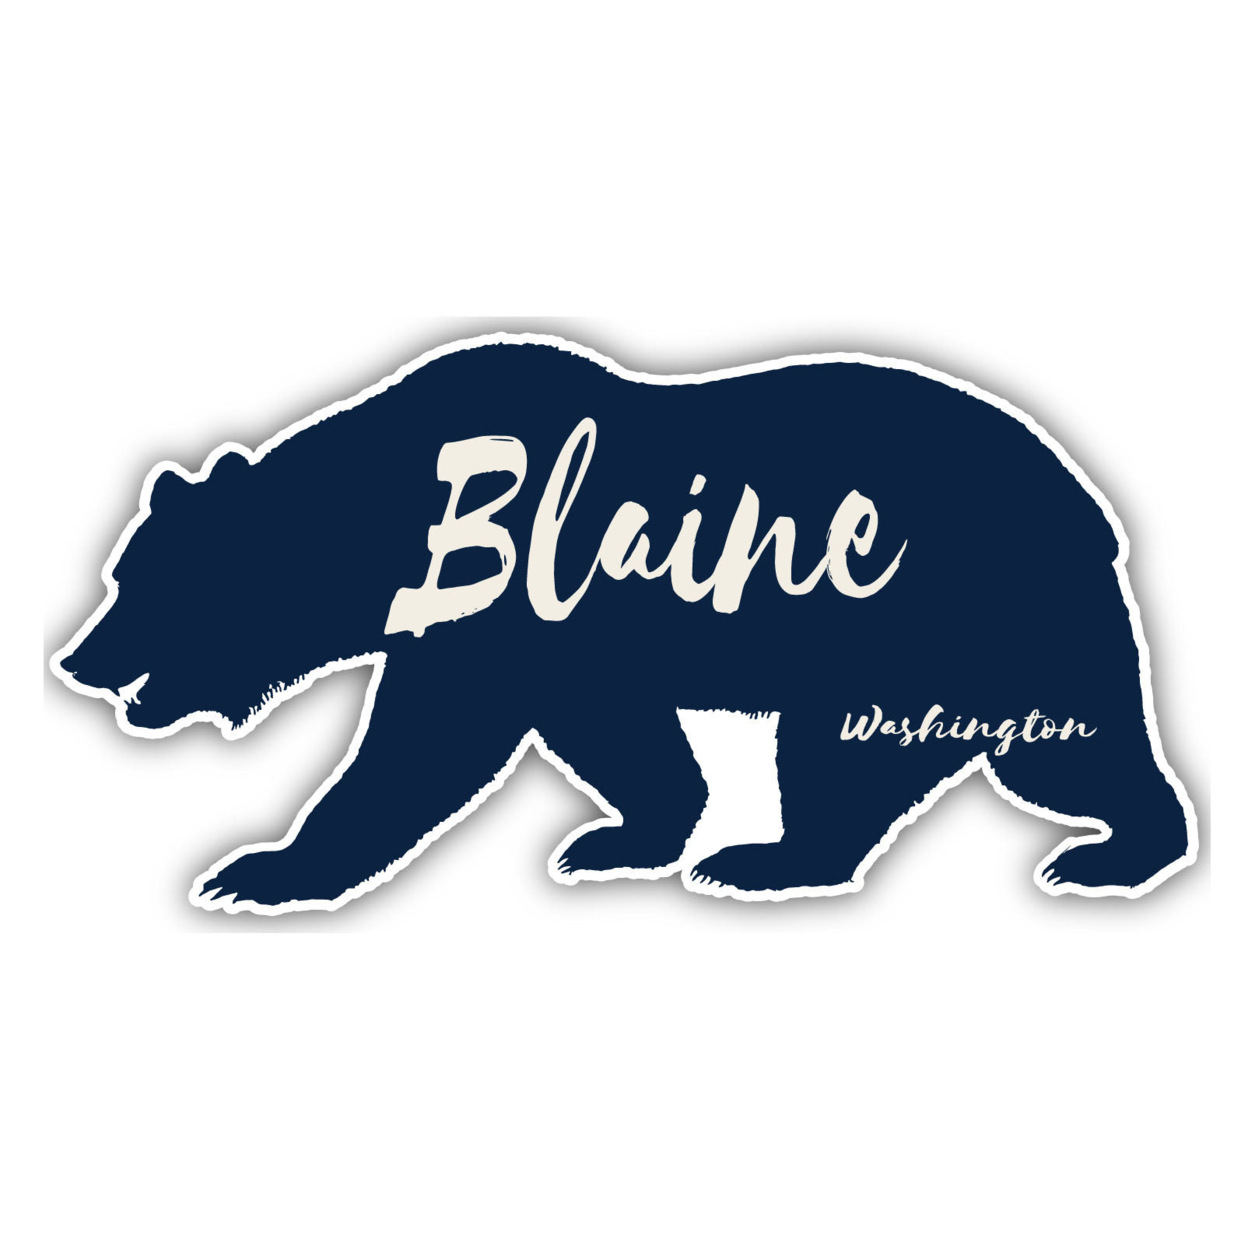 Blaine Washington Souvenir Decorative Stickers (Choose Theme And Size) - 4-Pack, 4-Inch, Bear